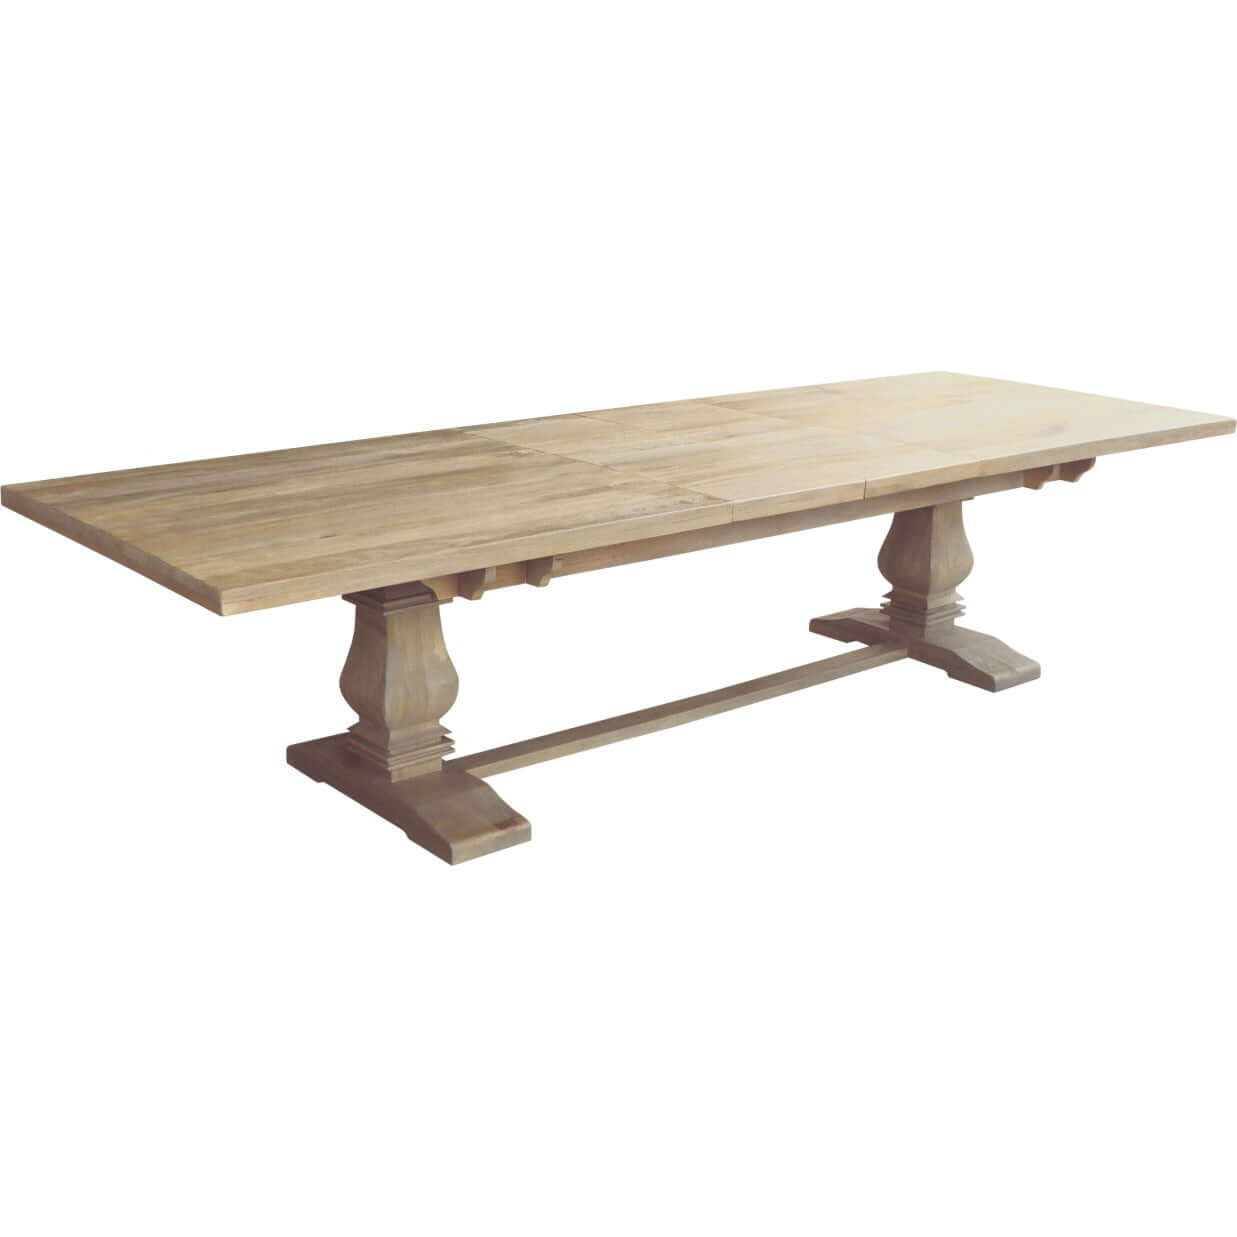 Gloriosa Dining Table 258-348cm Extendable Pedestal Mango Wood - Honey Wash-Upinteriors